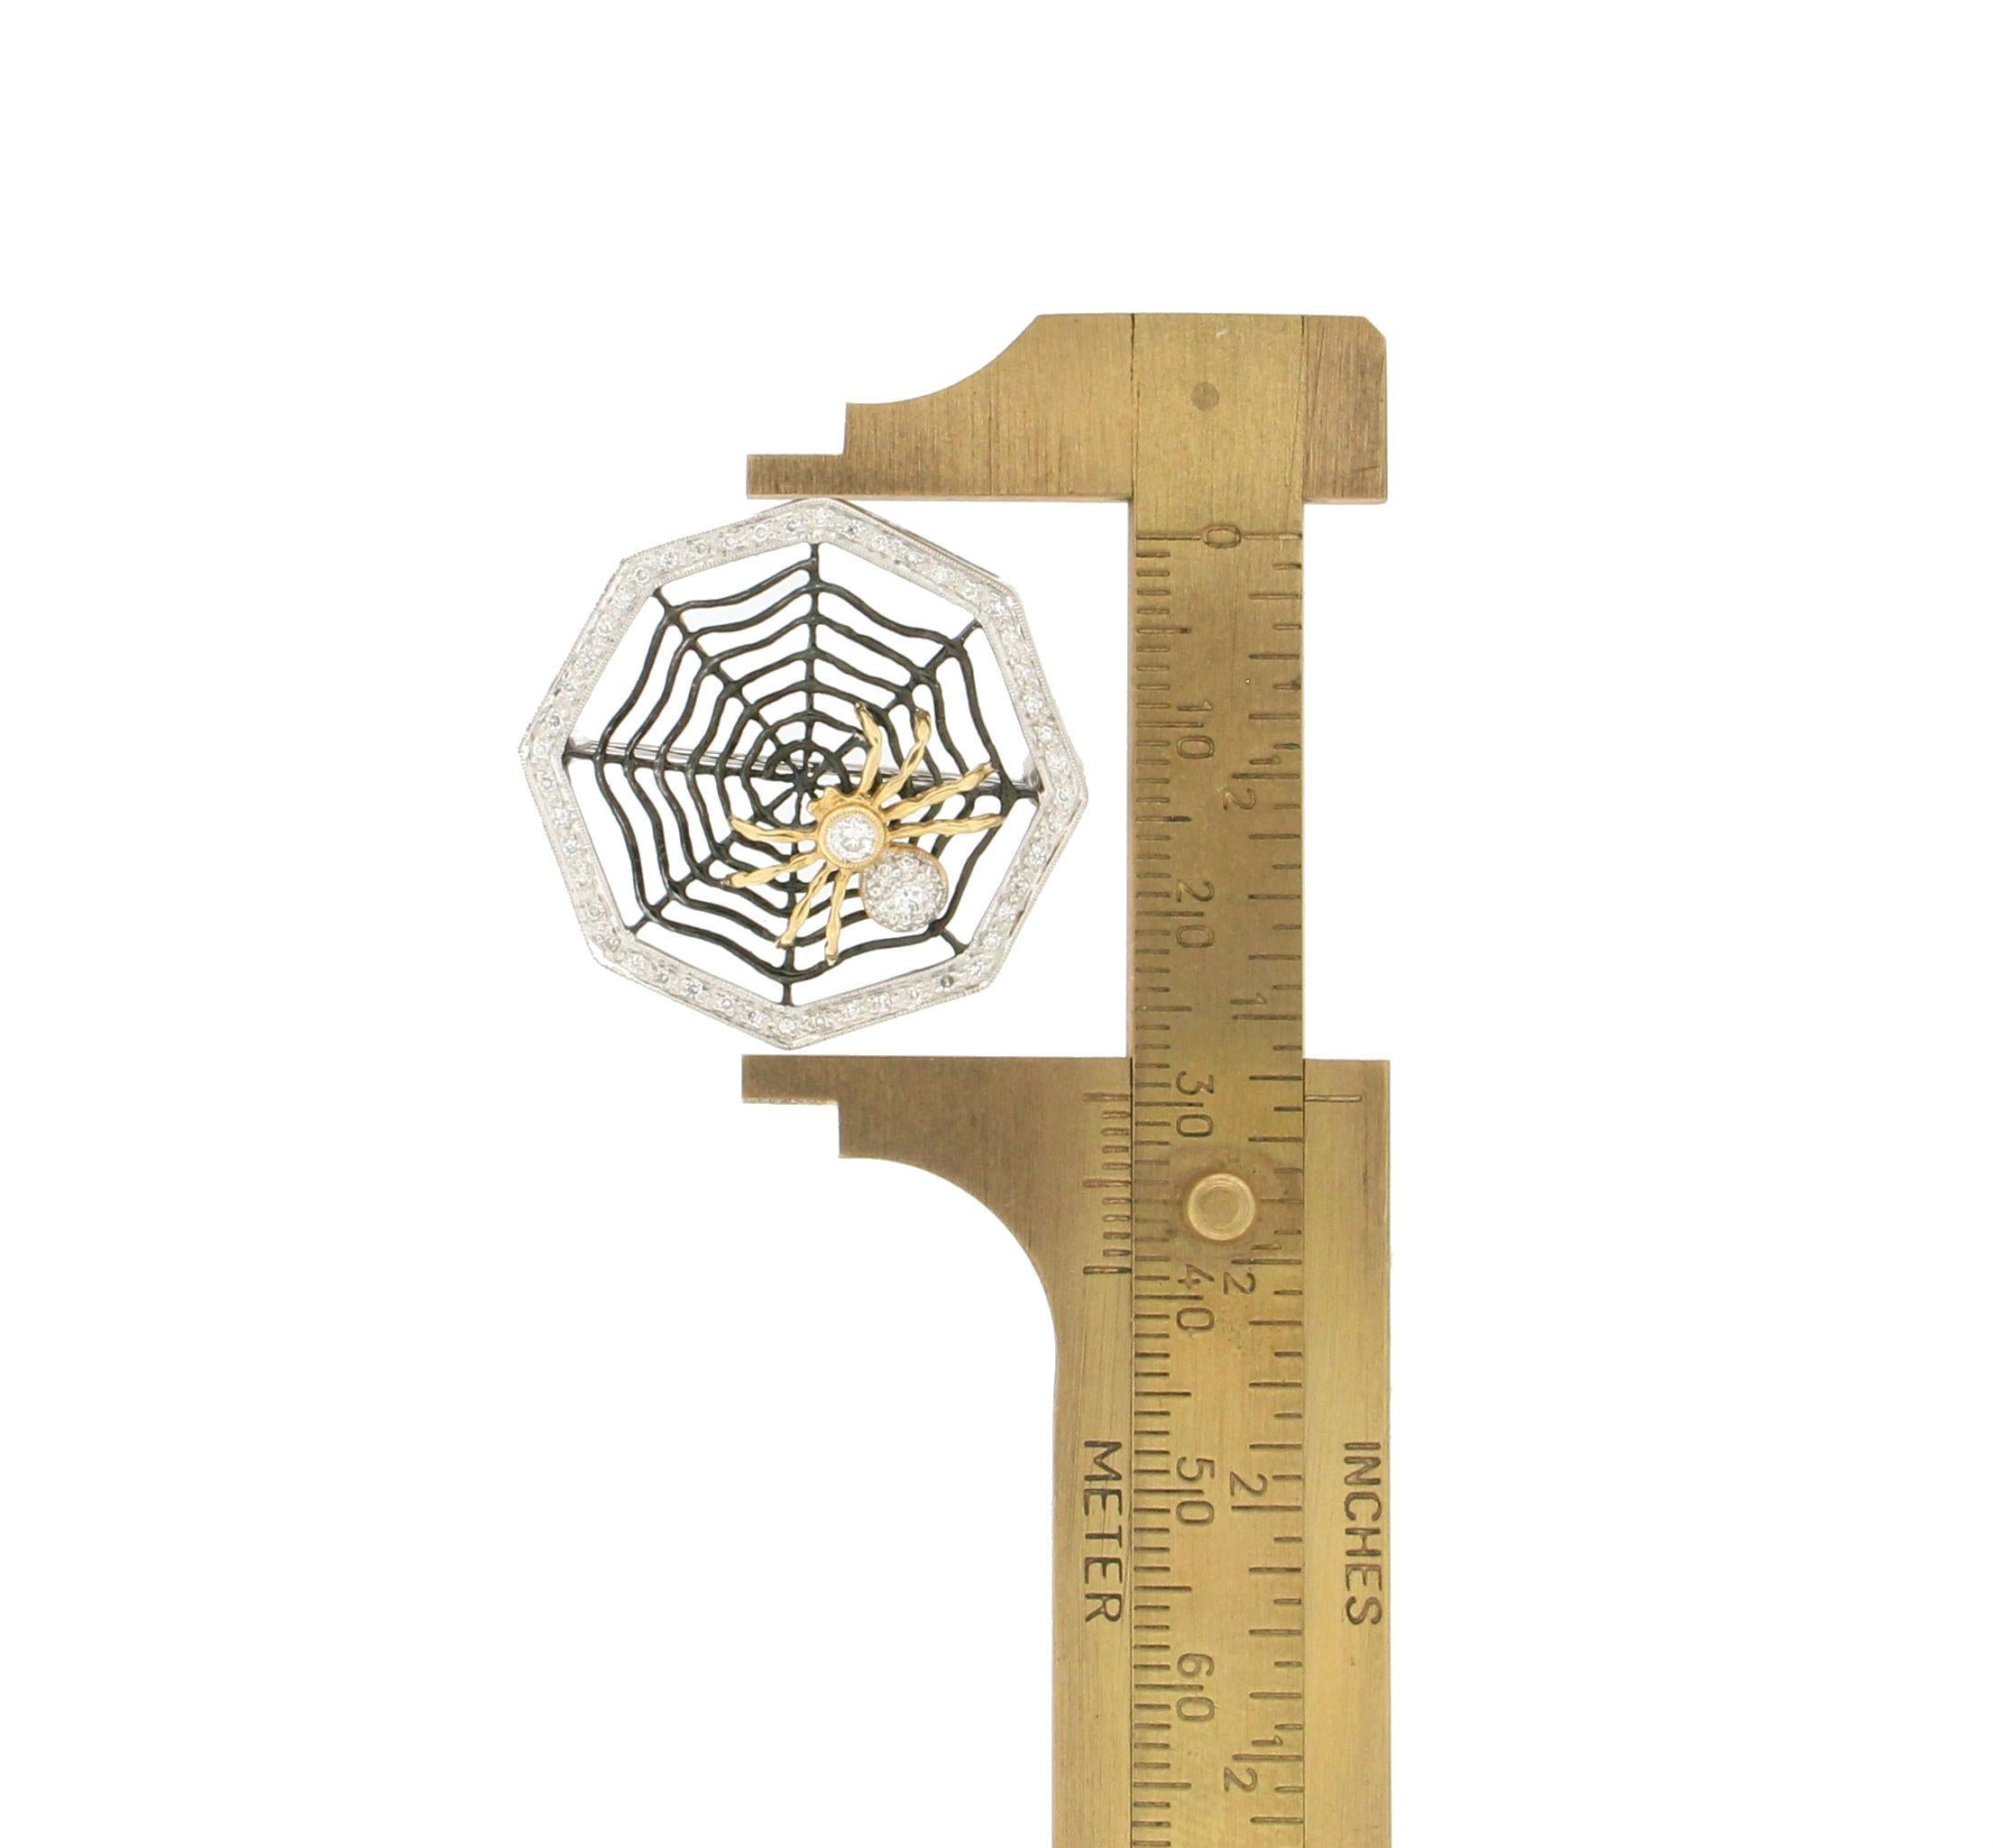 Brilliant Cut Handcraft Spider Web 18 Karat White and Yellow Gold Diamonds Brooch